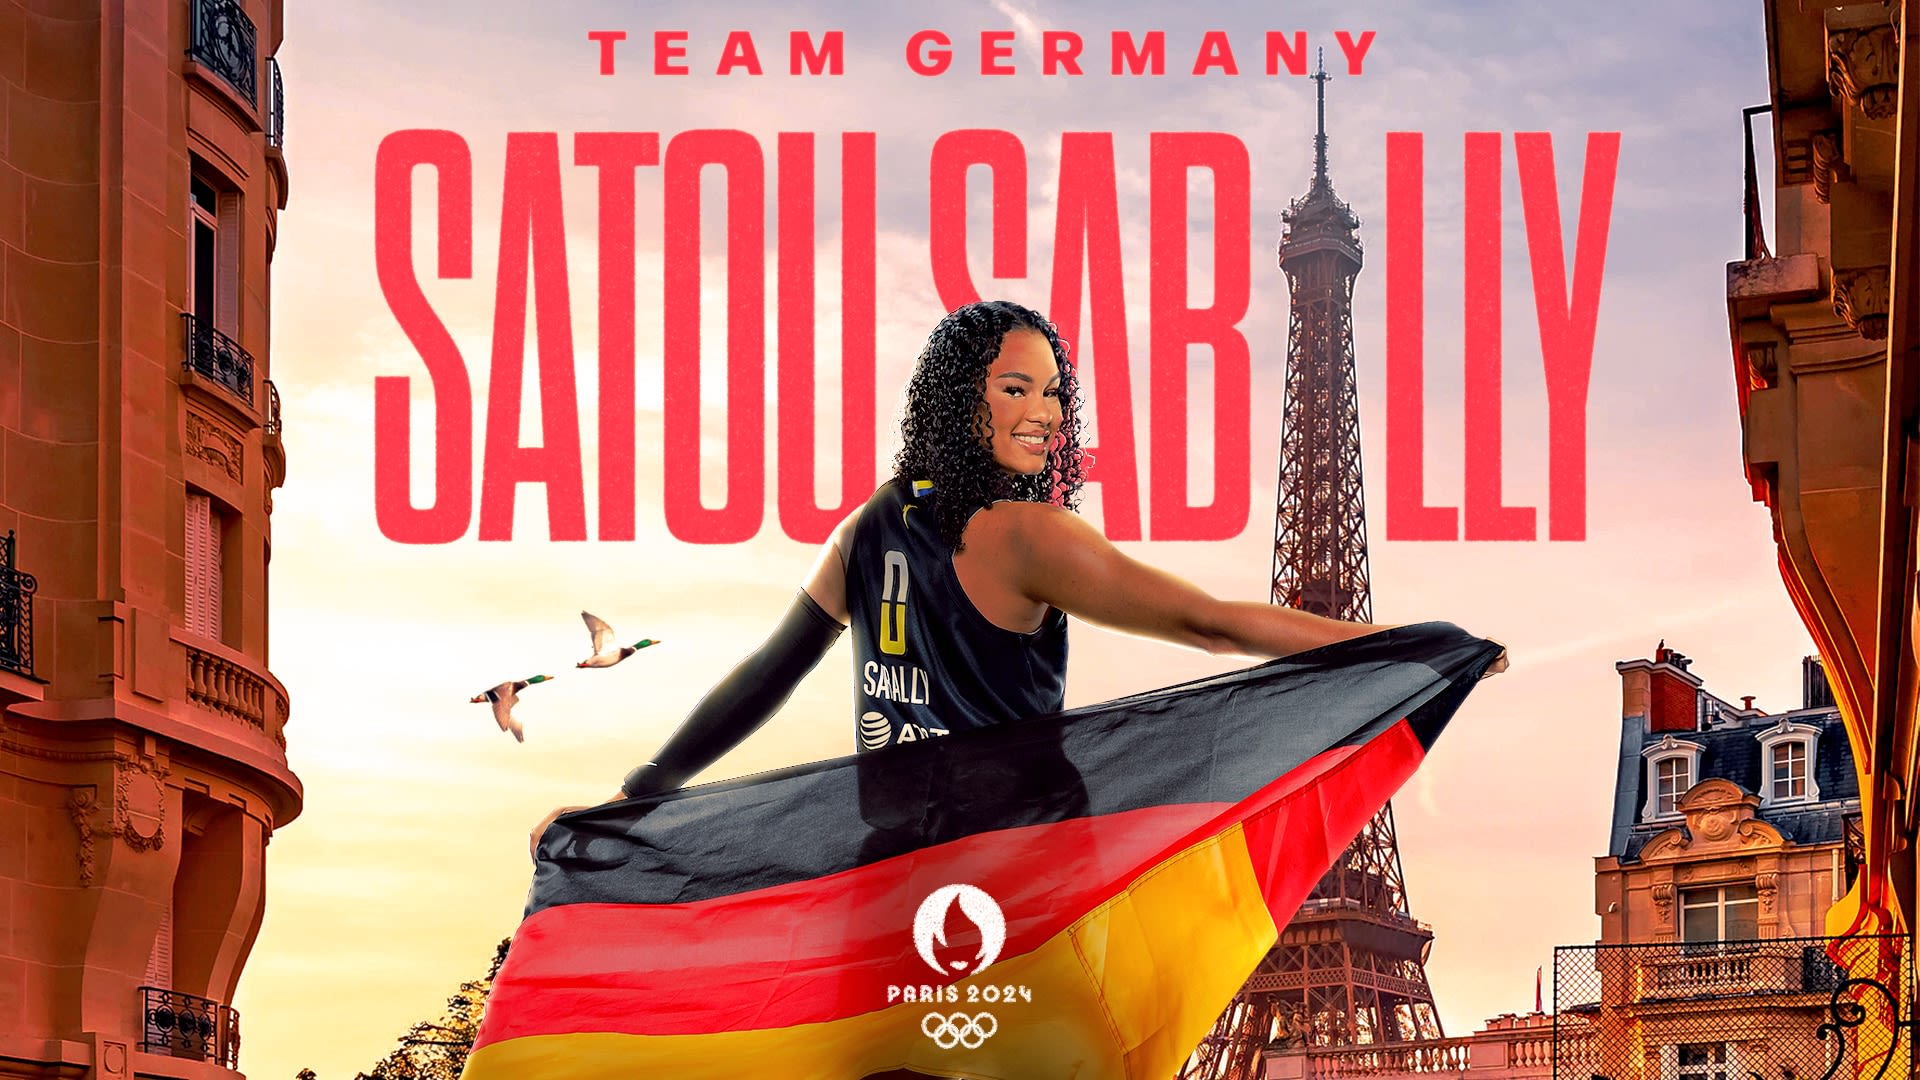 Satou Sabally To Represent Germany at 2024 Paris Olympic Games